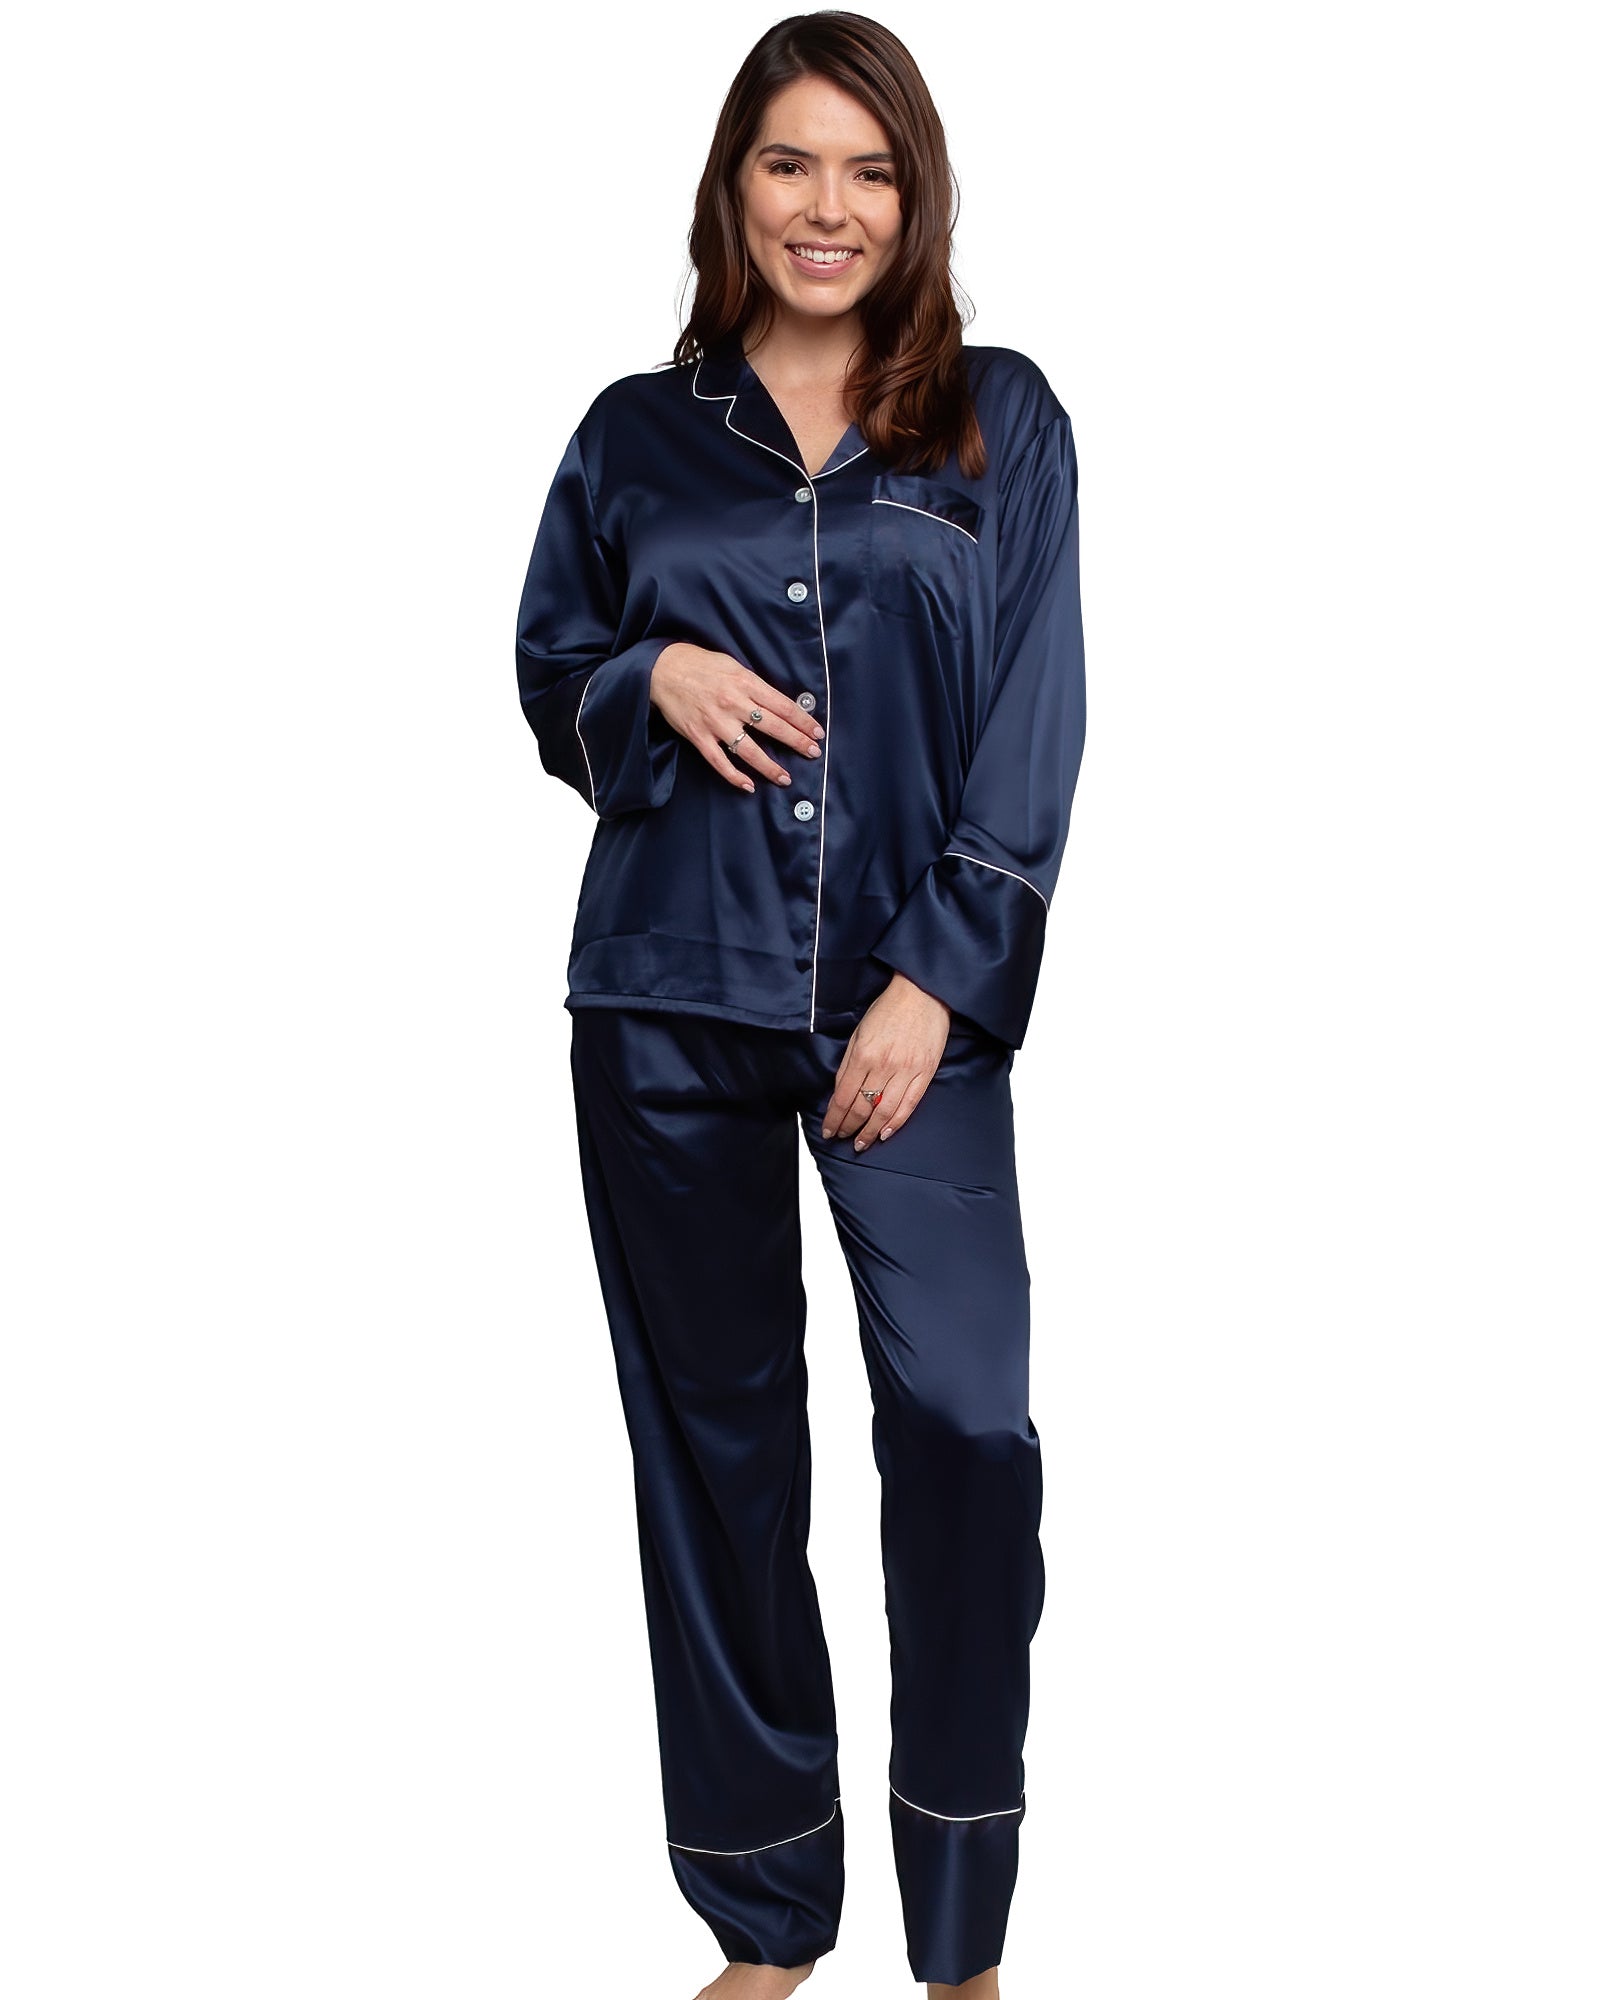 Belle's Design Women's Silk Satin Pajama Button Down Long Sleeve and Pants  Set Sleepwear Loungewear S To XXL